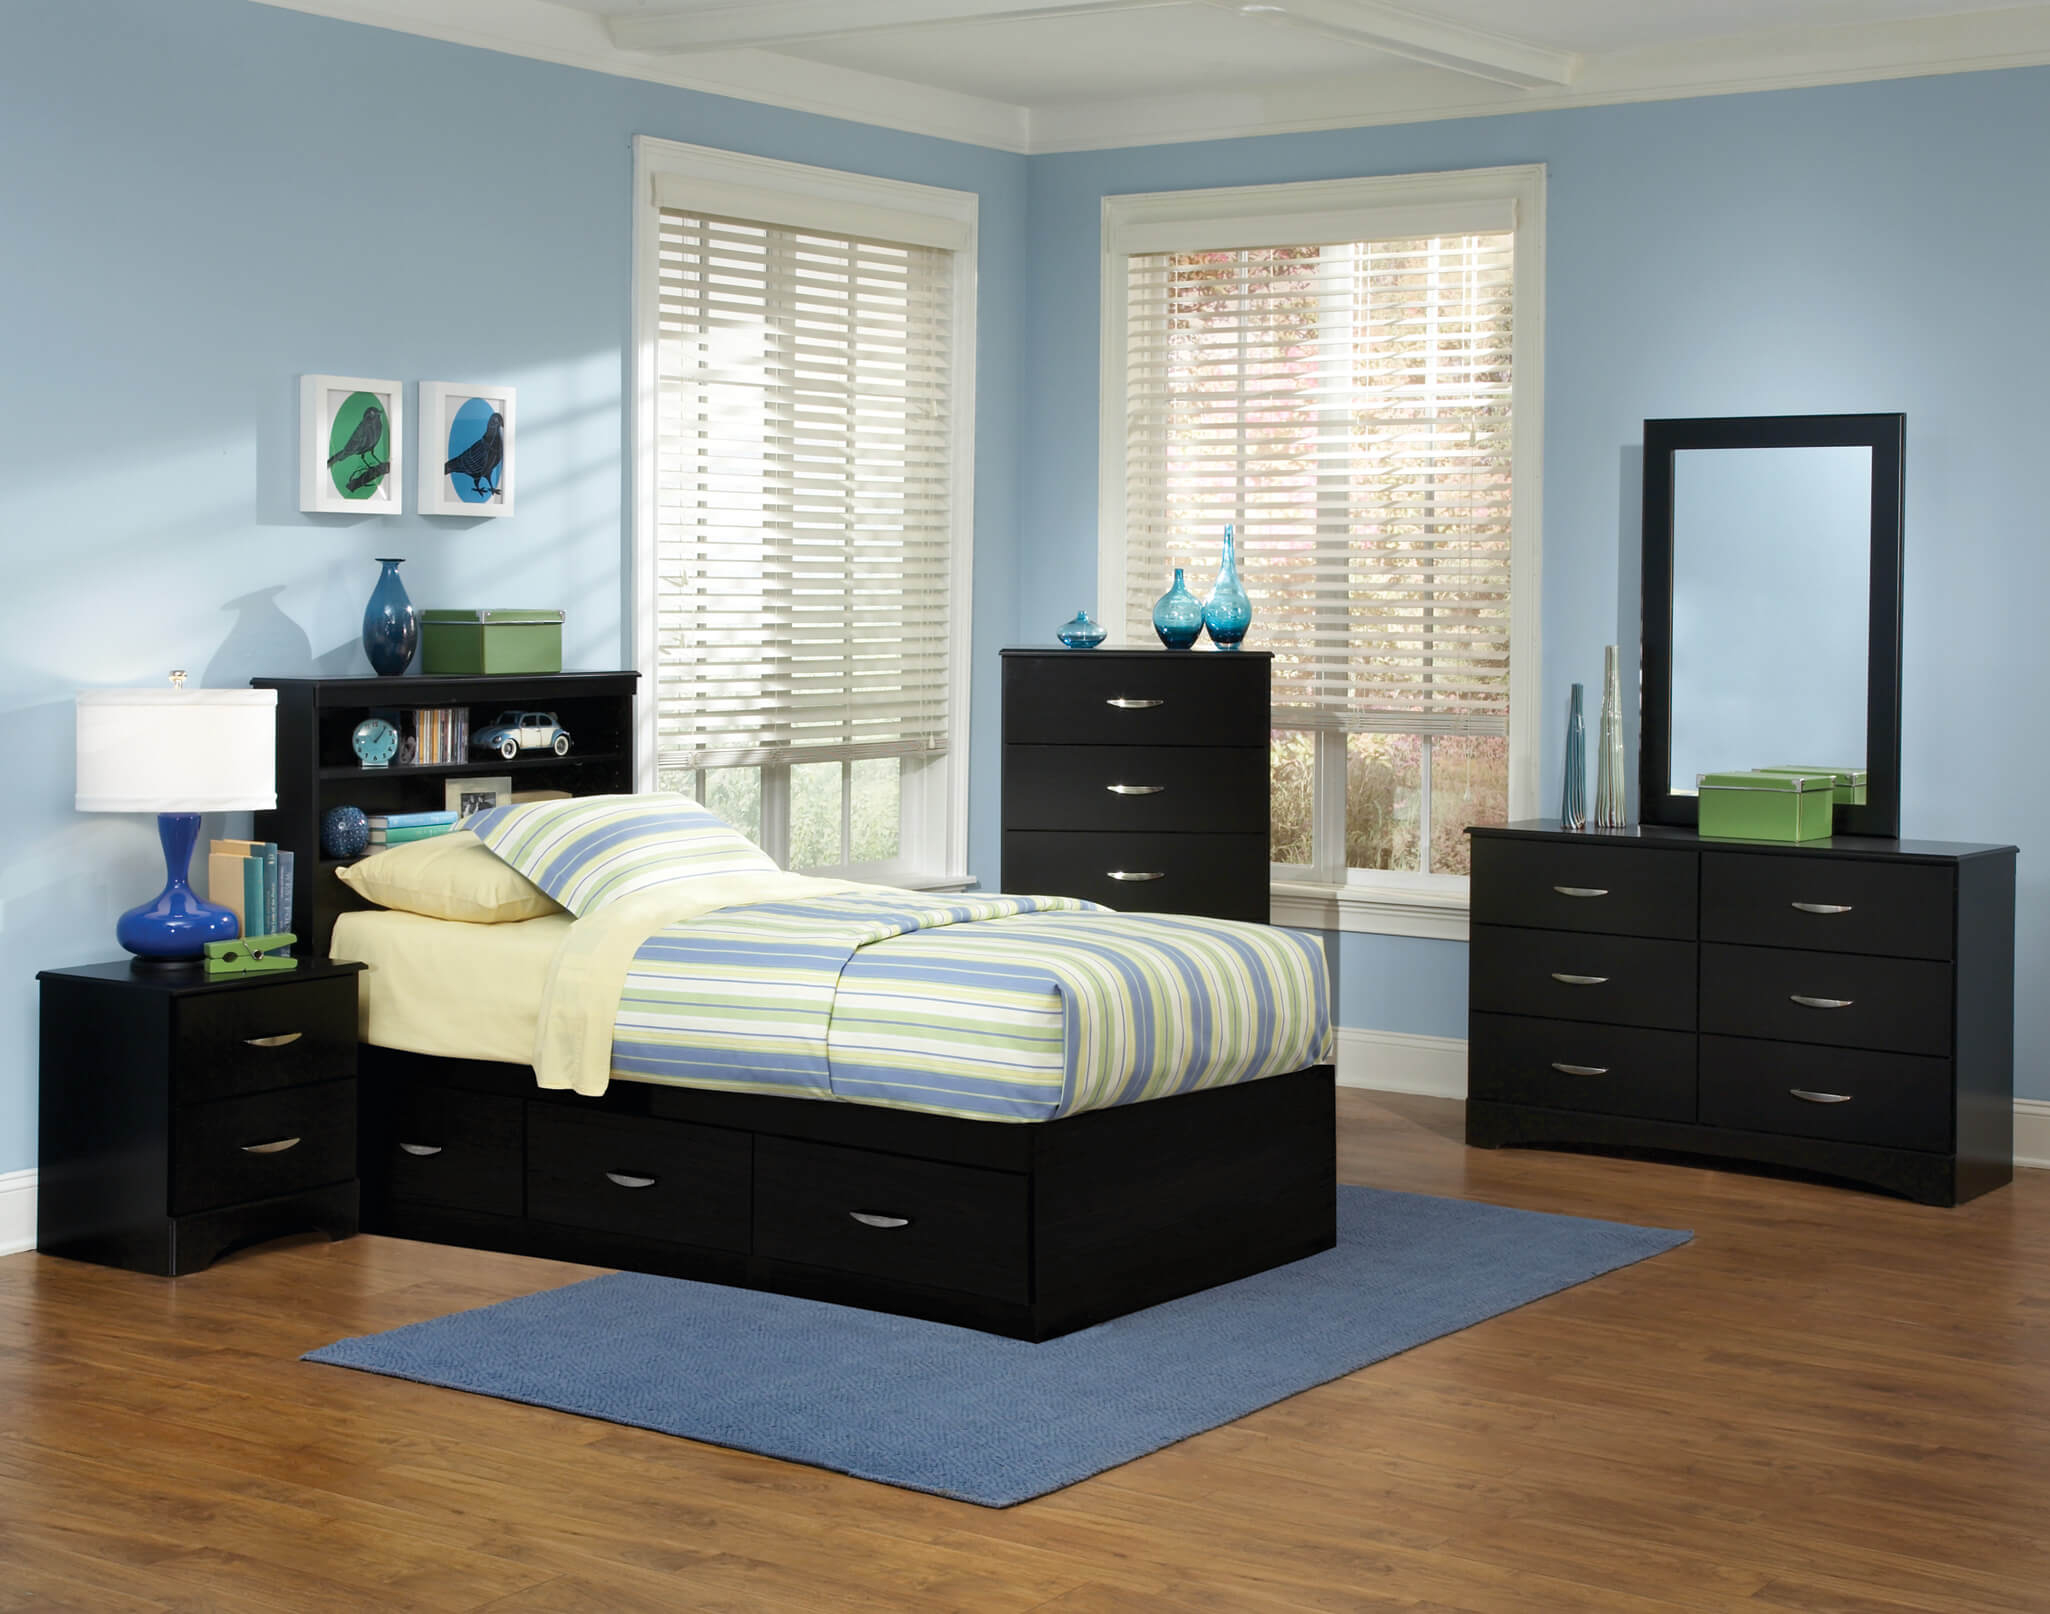 black twin size bedroom furniture